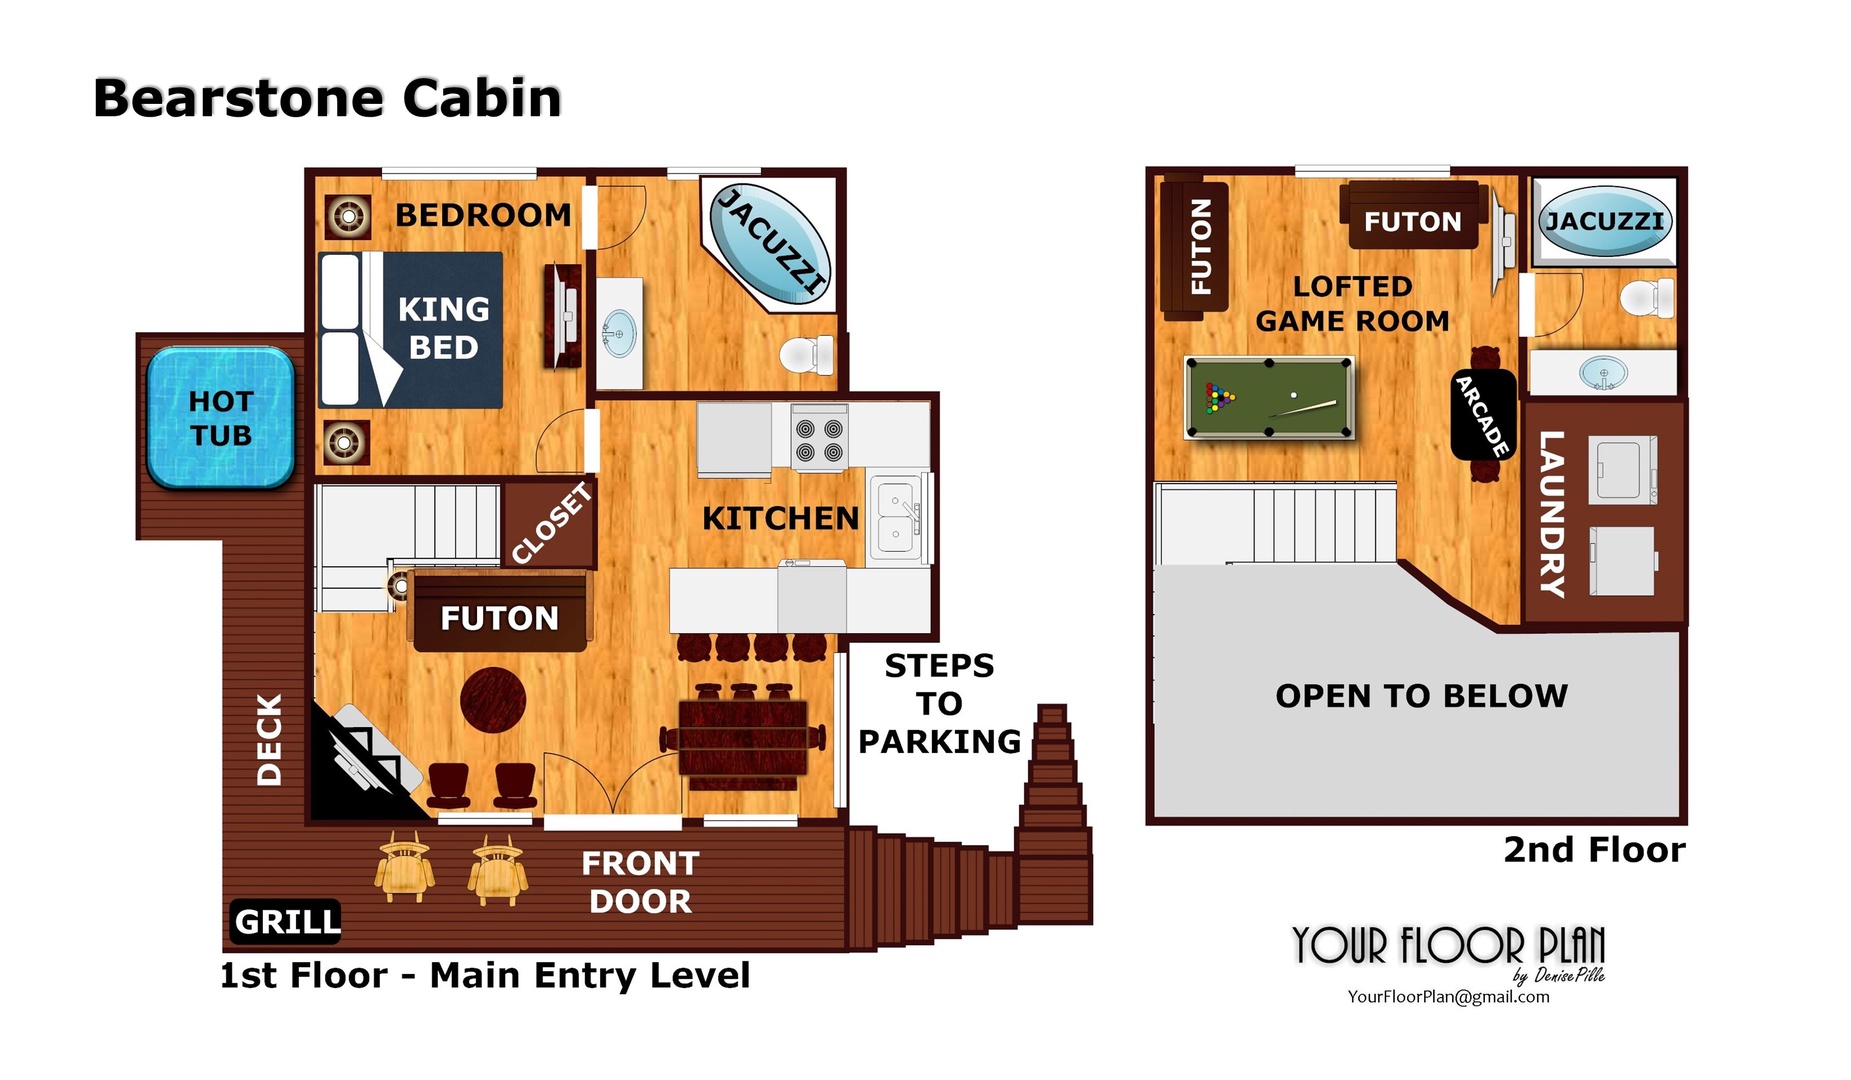 Bearstone Cabin - Floor Plan (Revision)